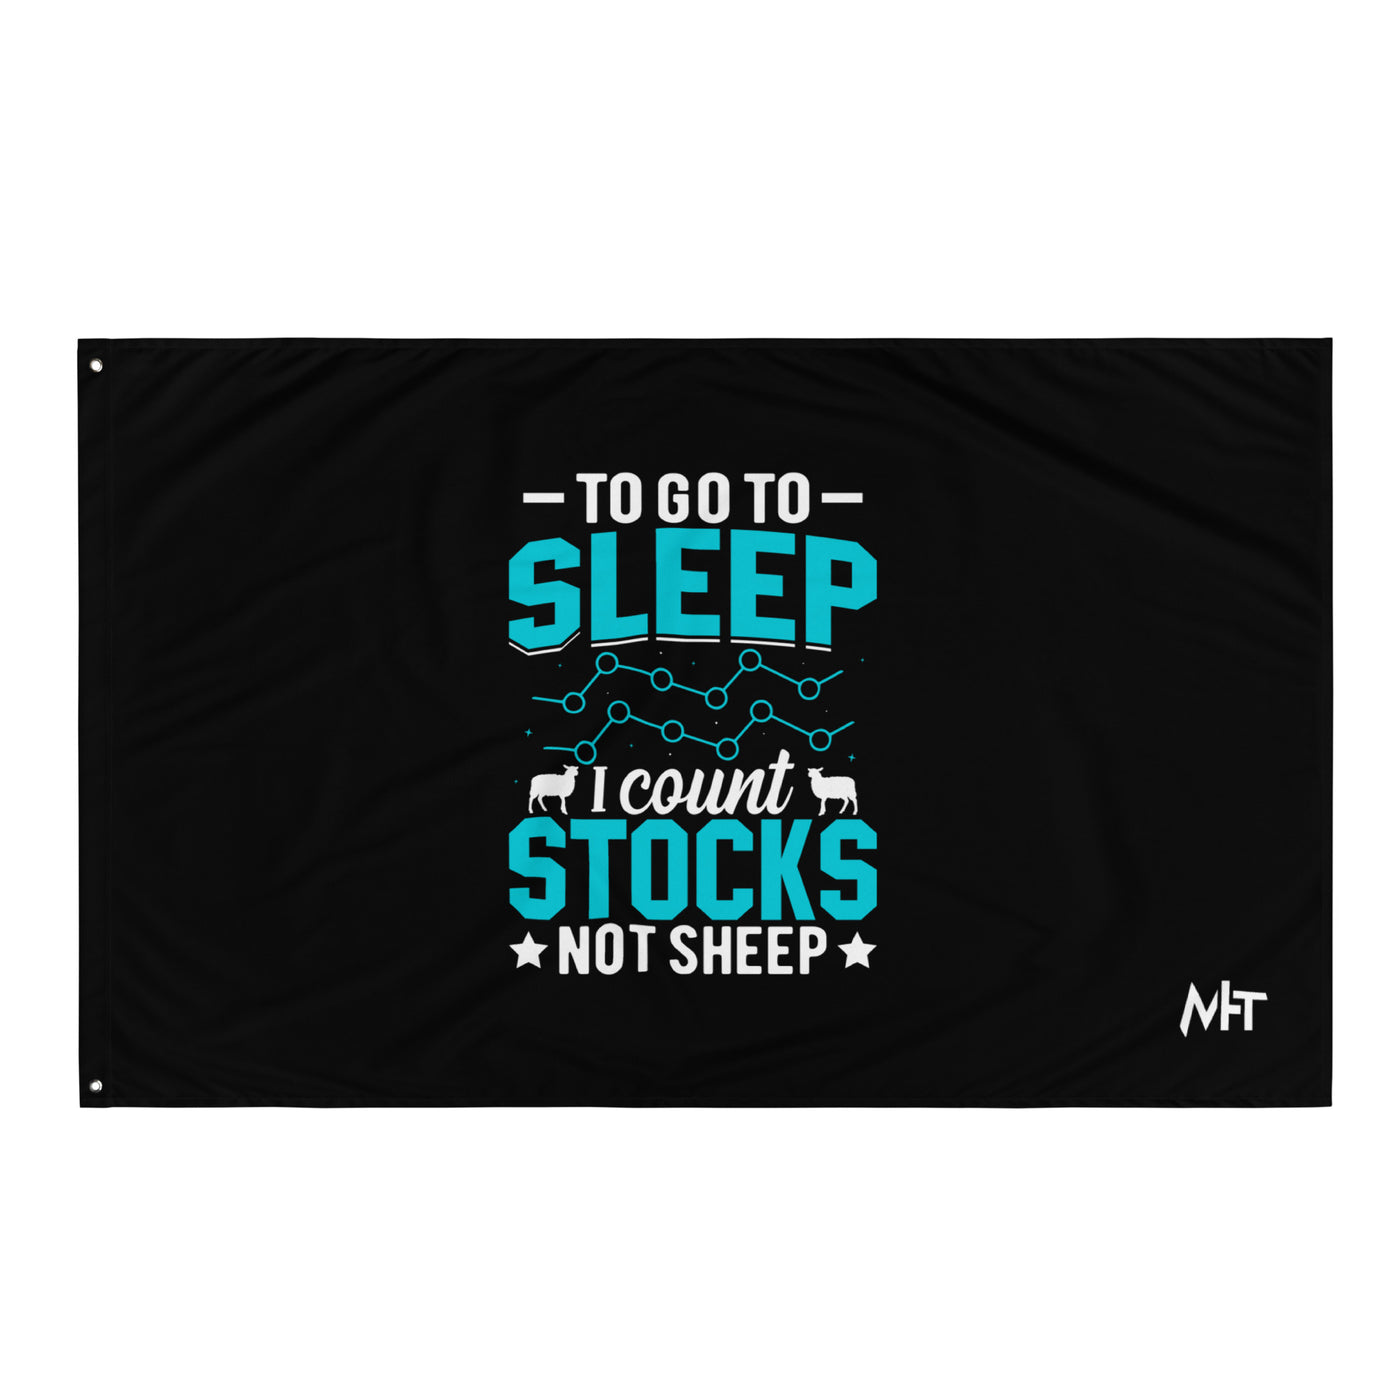 To go to sleep, I count stocks not sheep (DB) - Flag